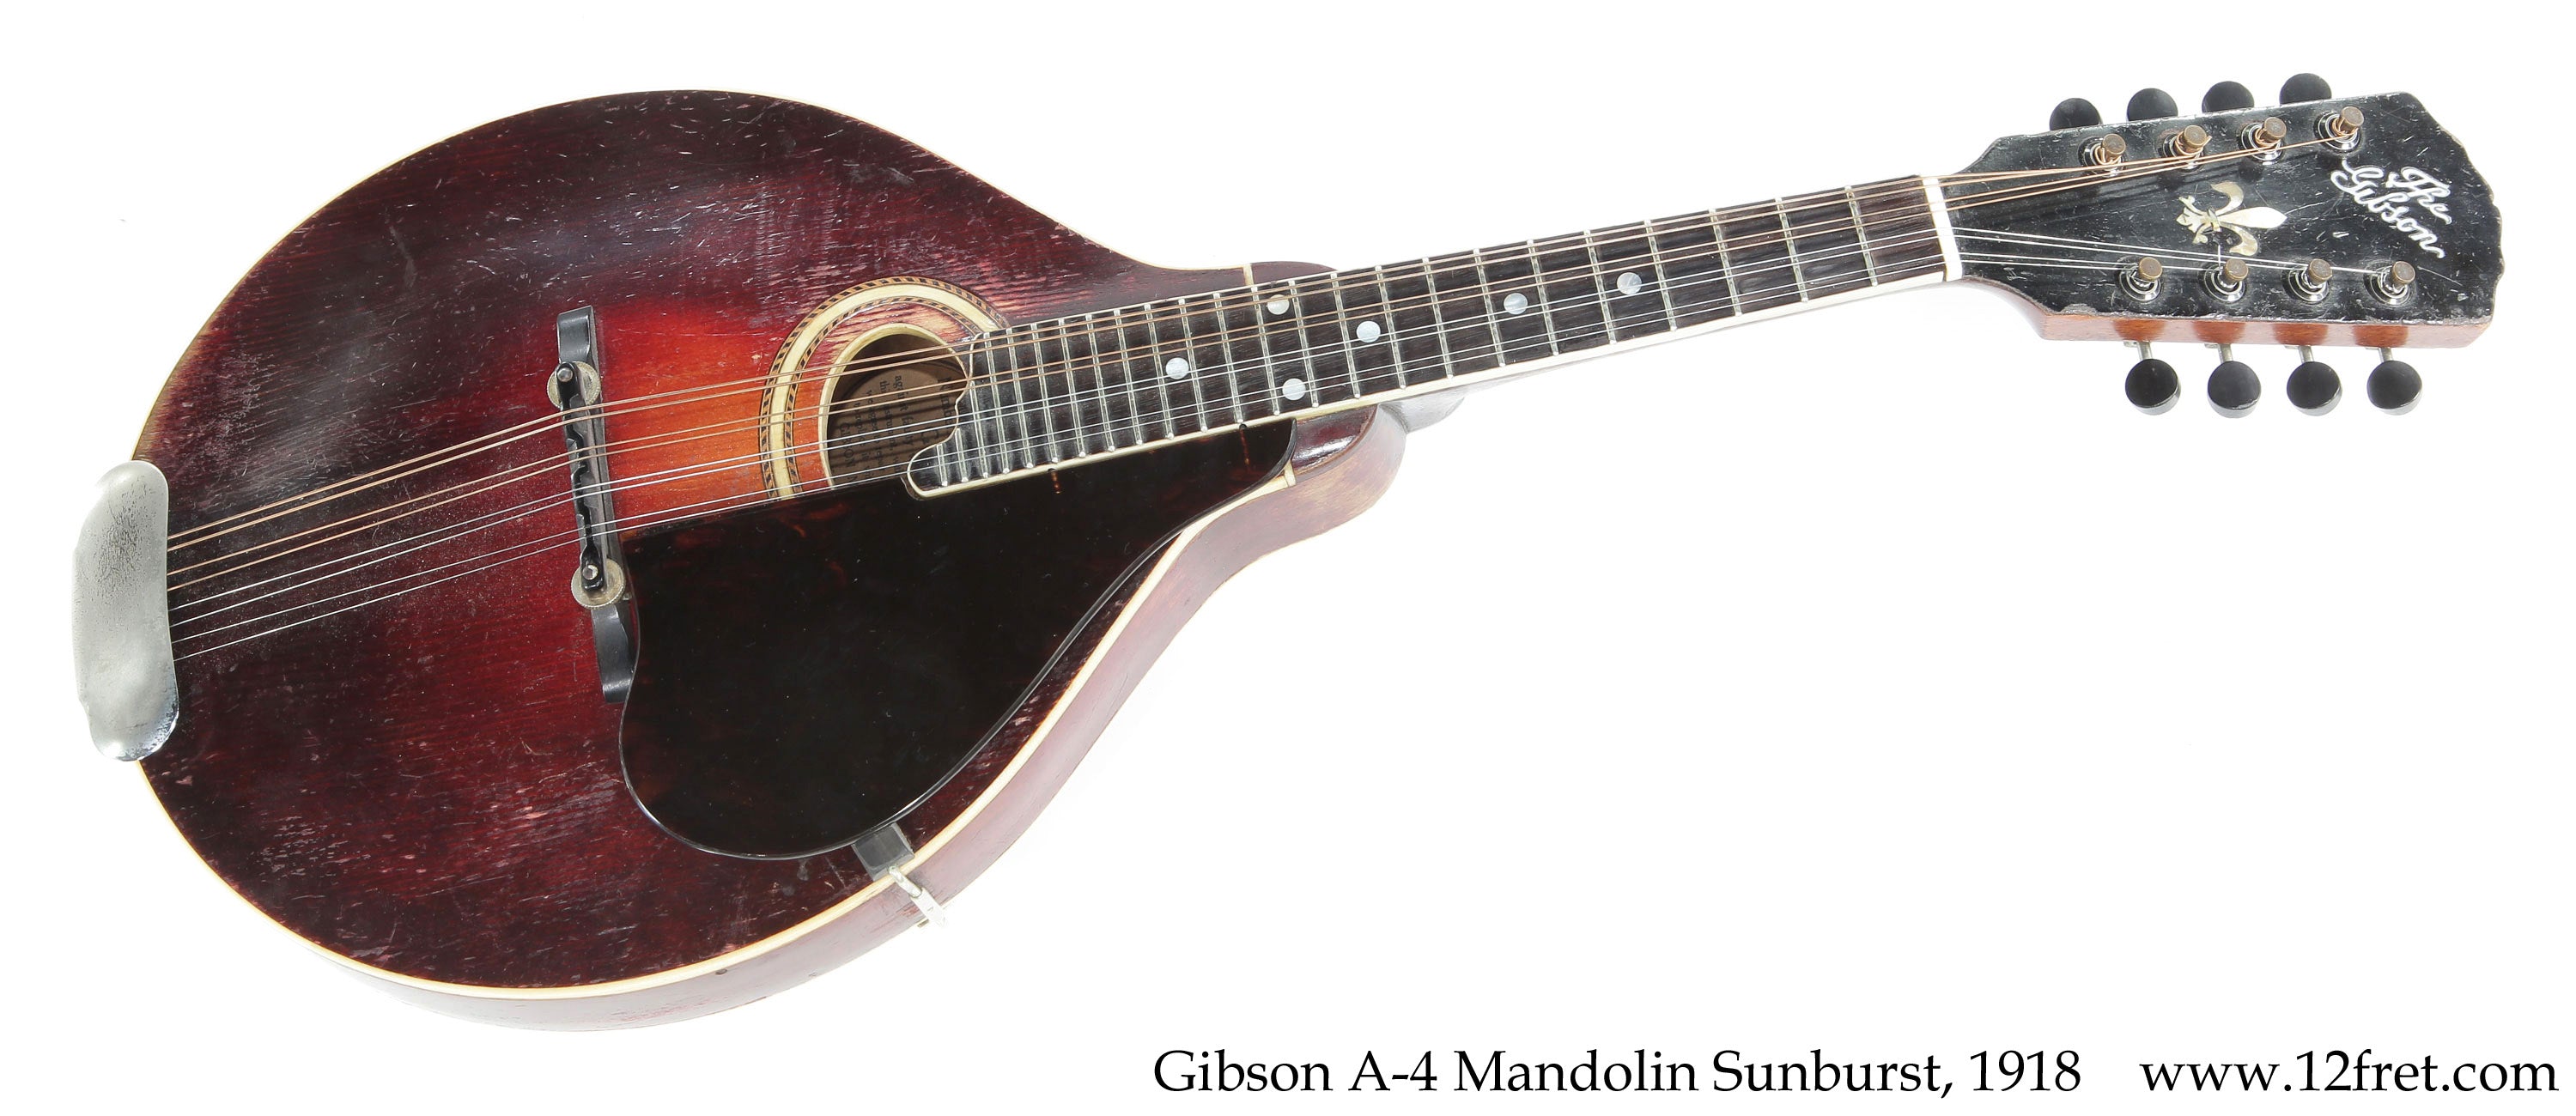 Gibson A-4 Mandolin Sunburst, 1918 - The Twelfth Fret